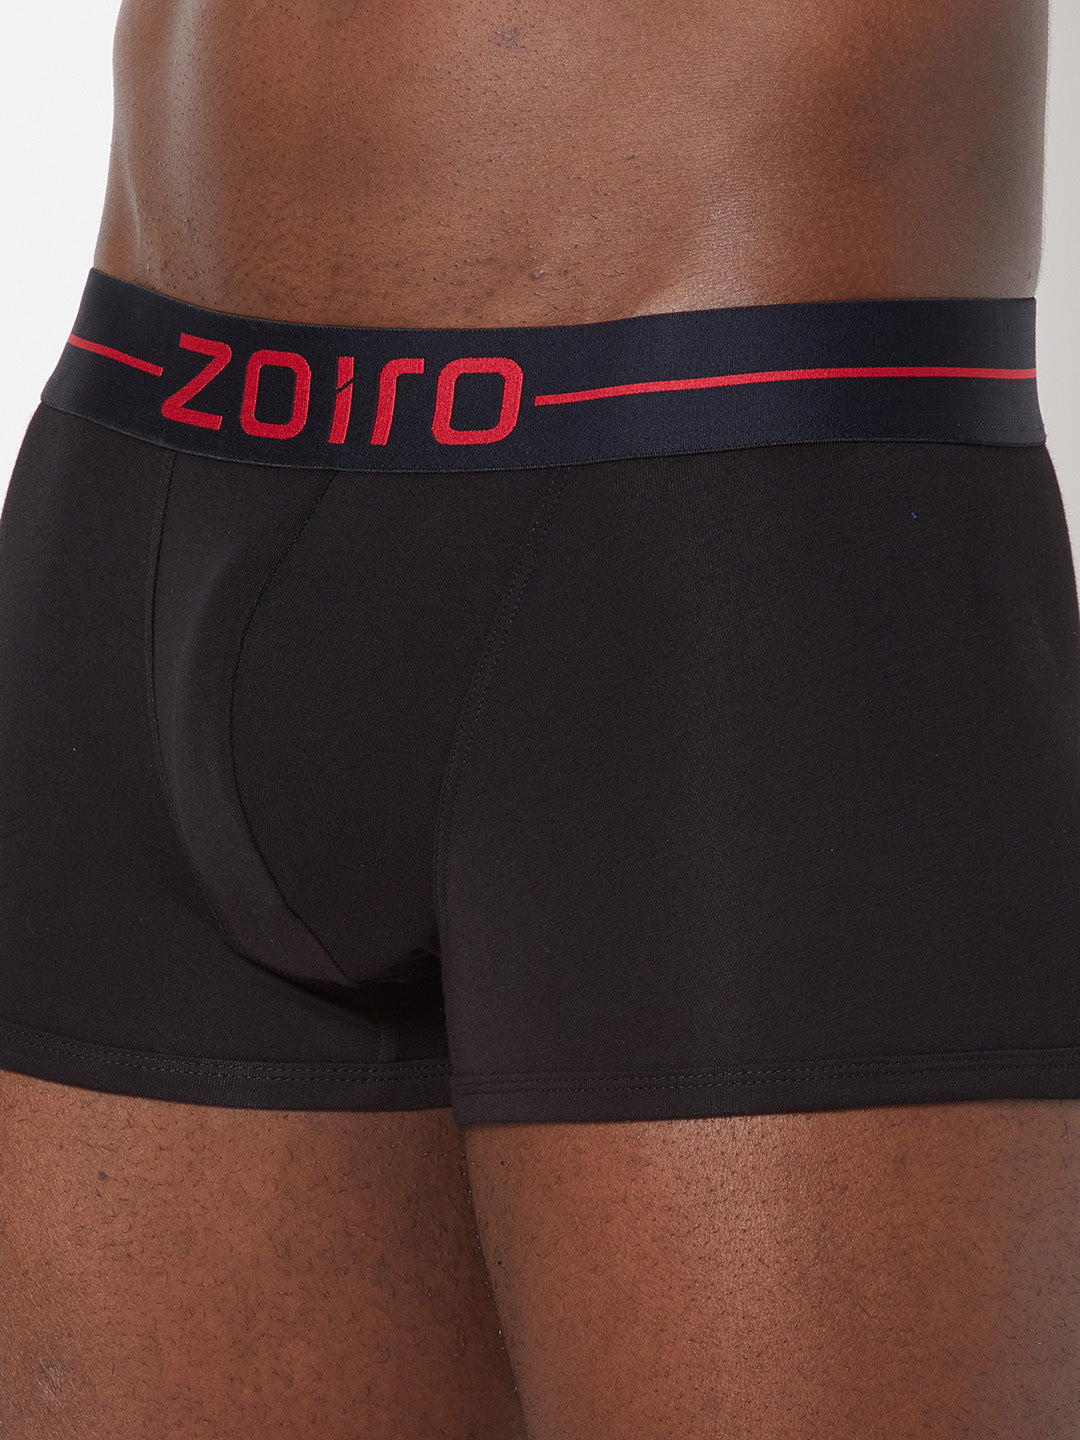 Zoiro Men&#39;s Cotton, Modal, Spandex Softs Trunk - Black (Red Elastic Branding)